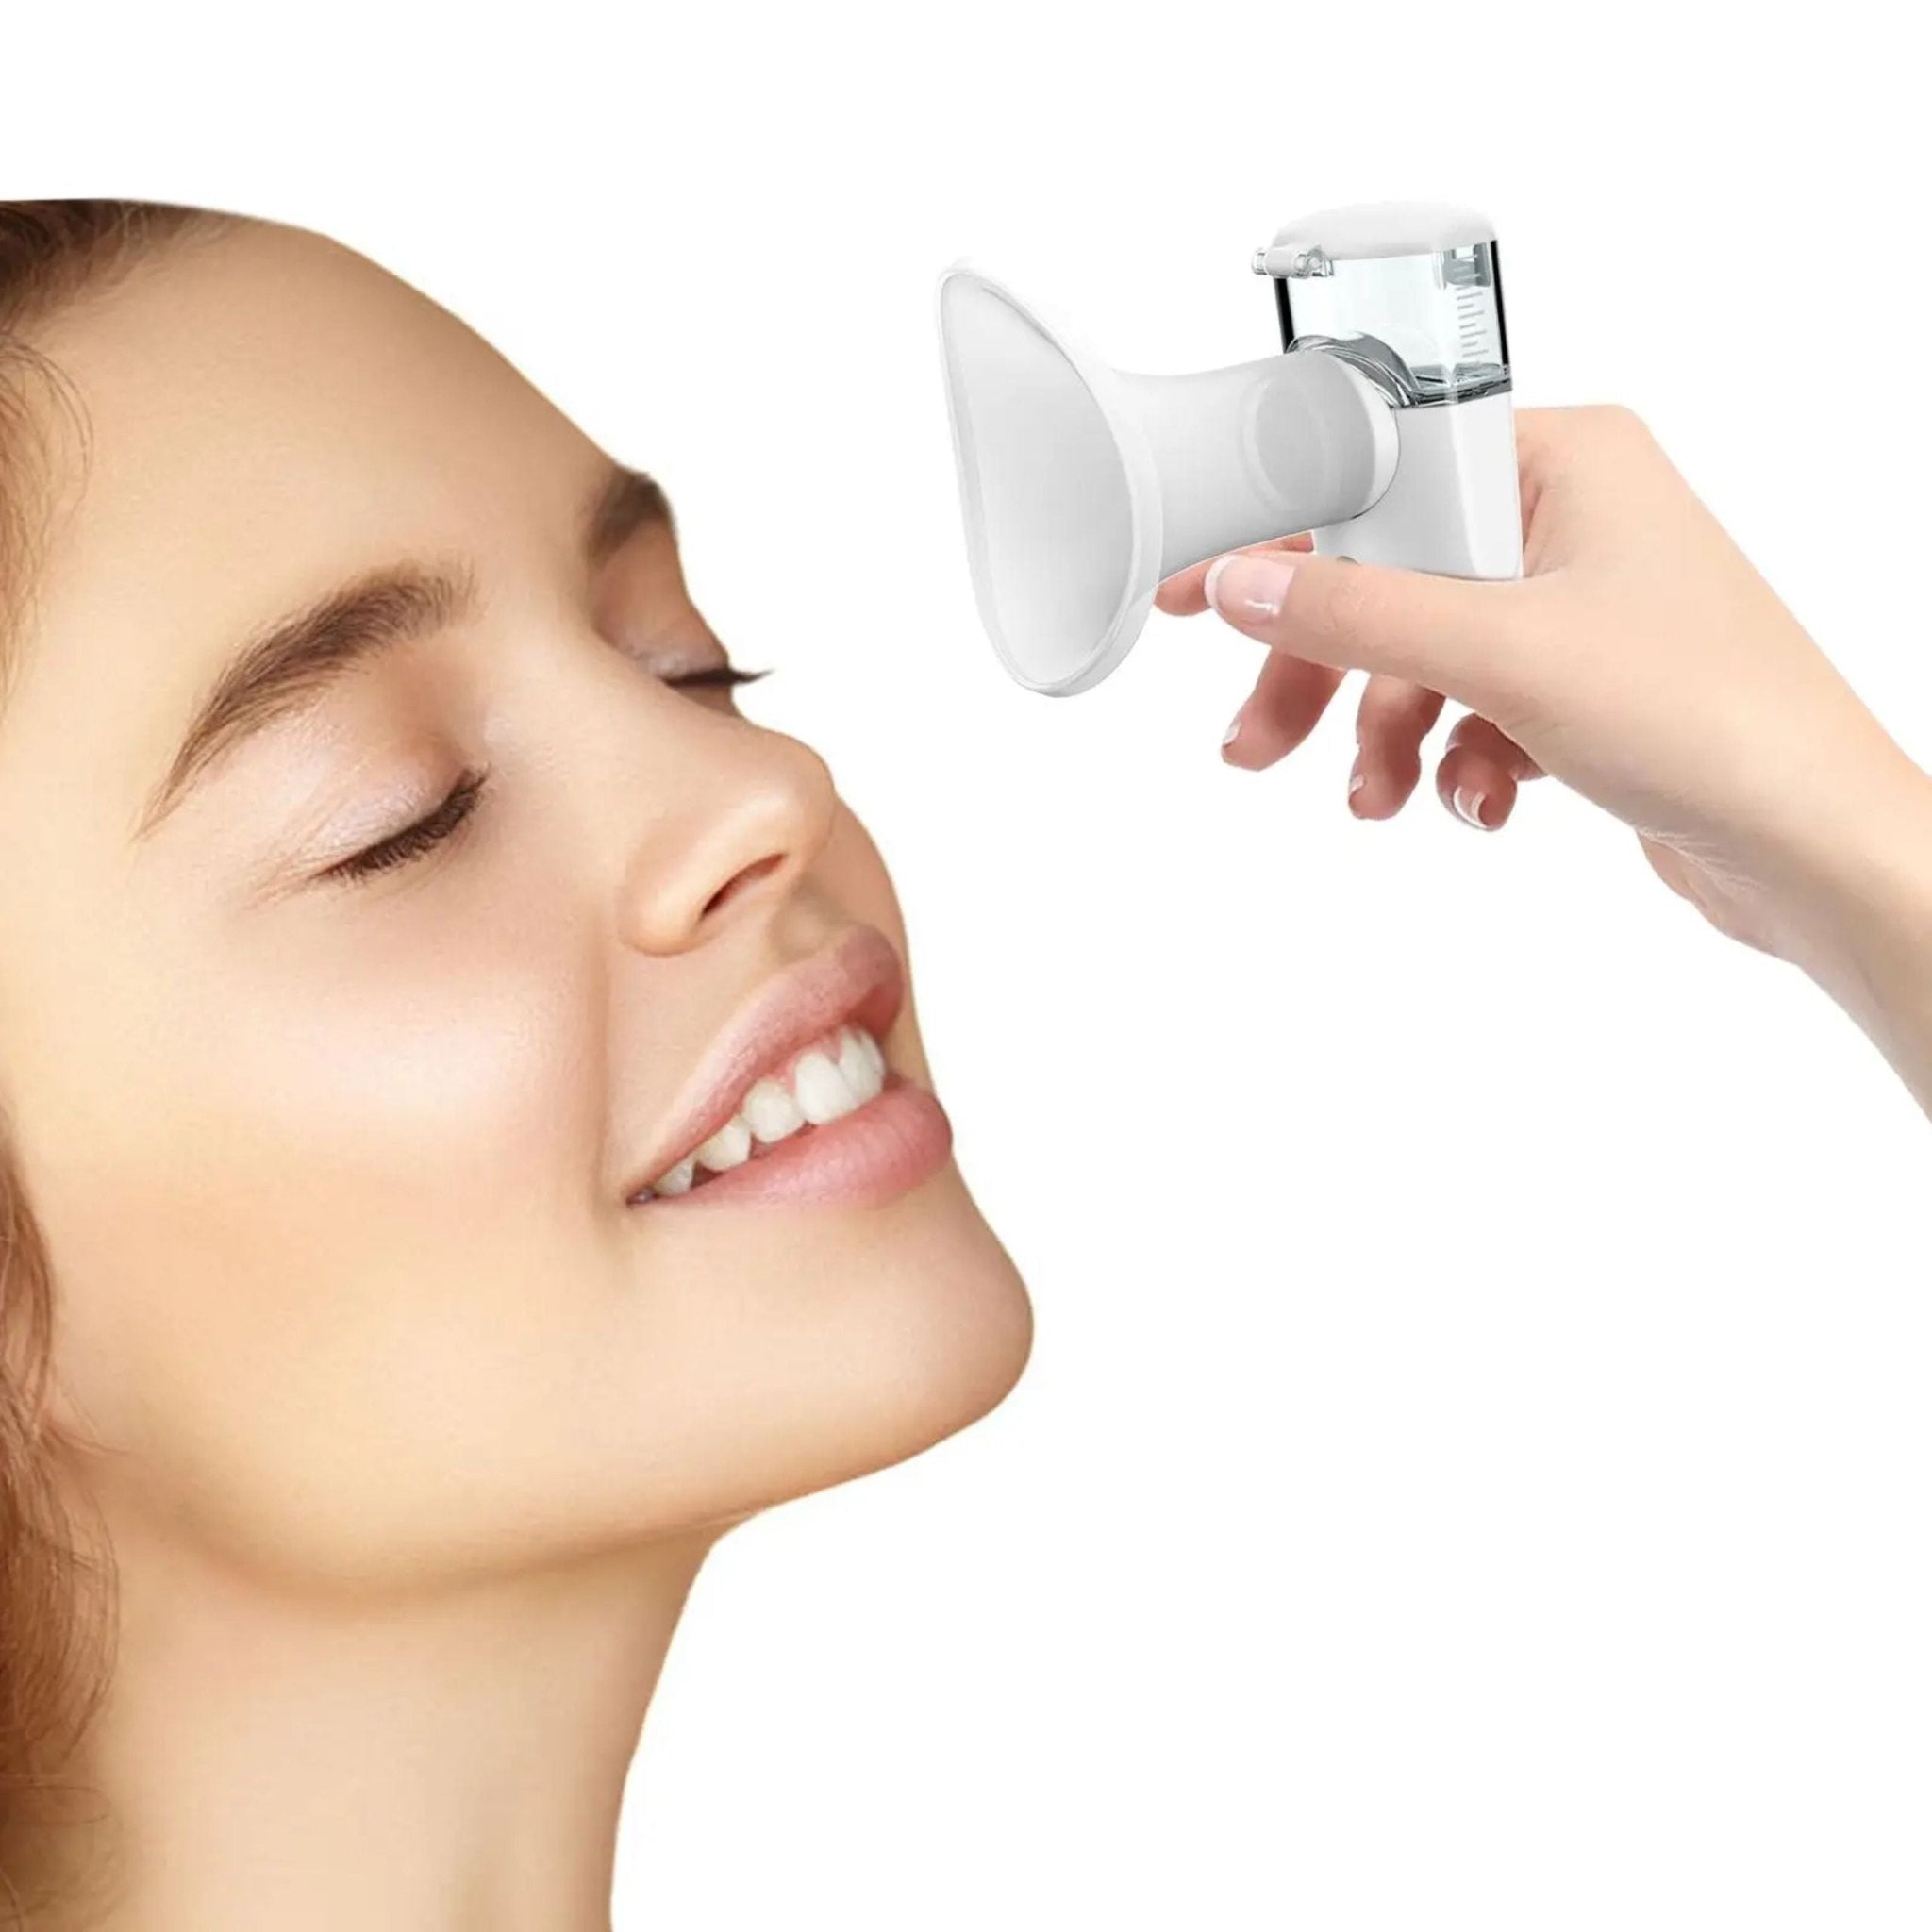 Celibery Portable Nebulizer & Eye Mist Sprayer - White